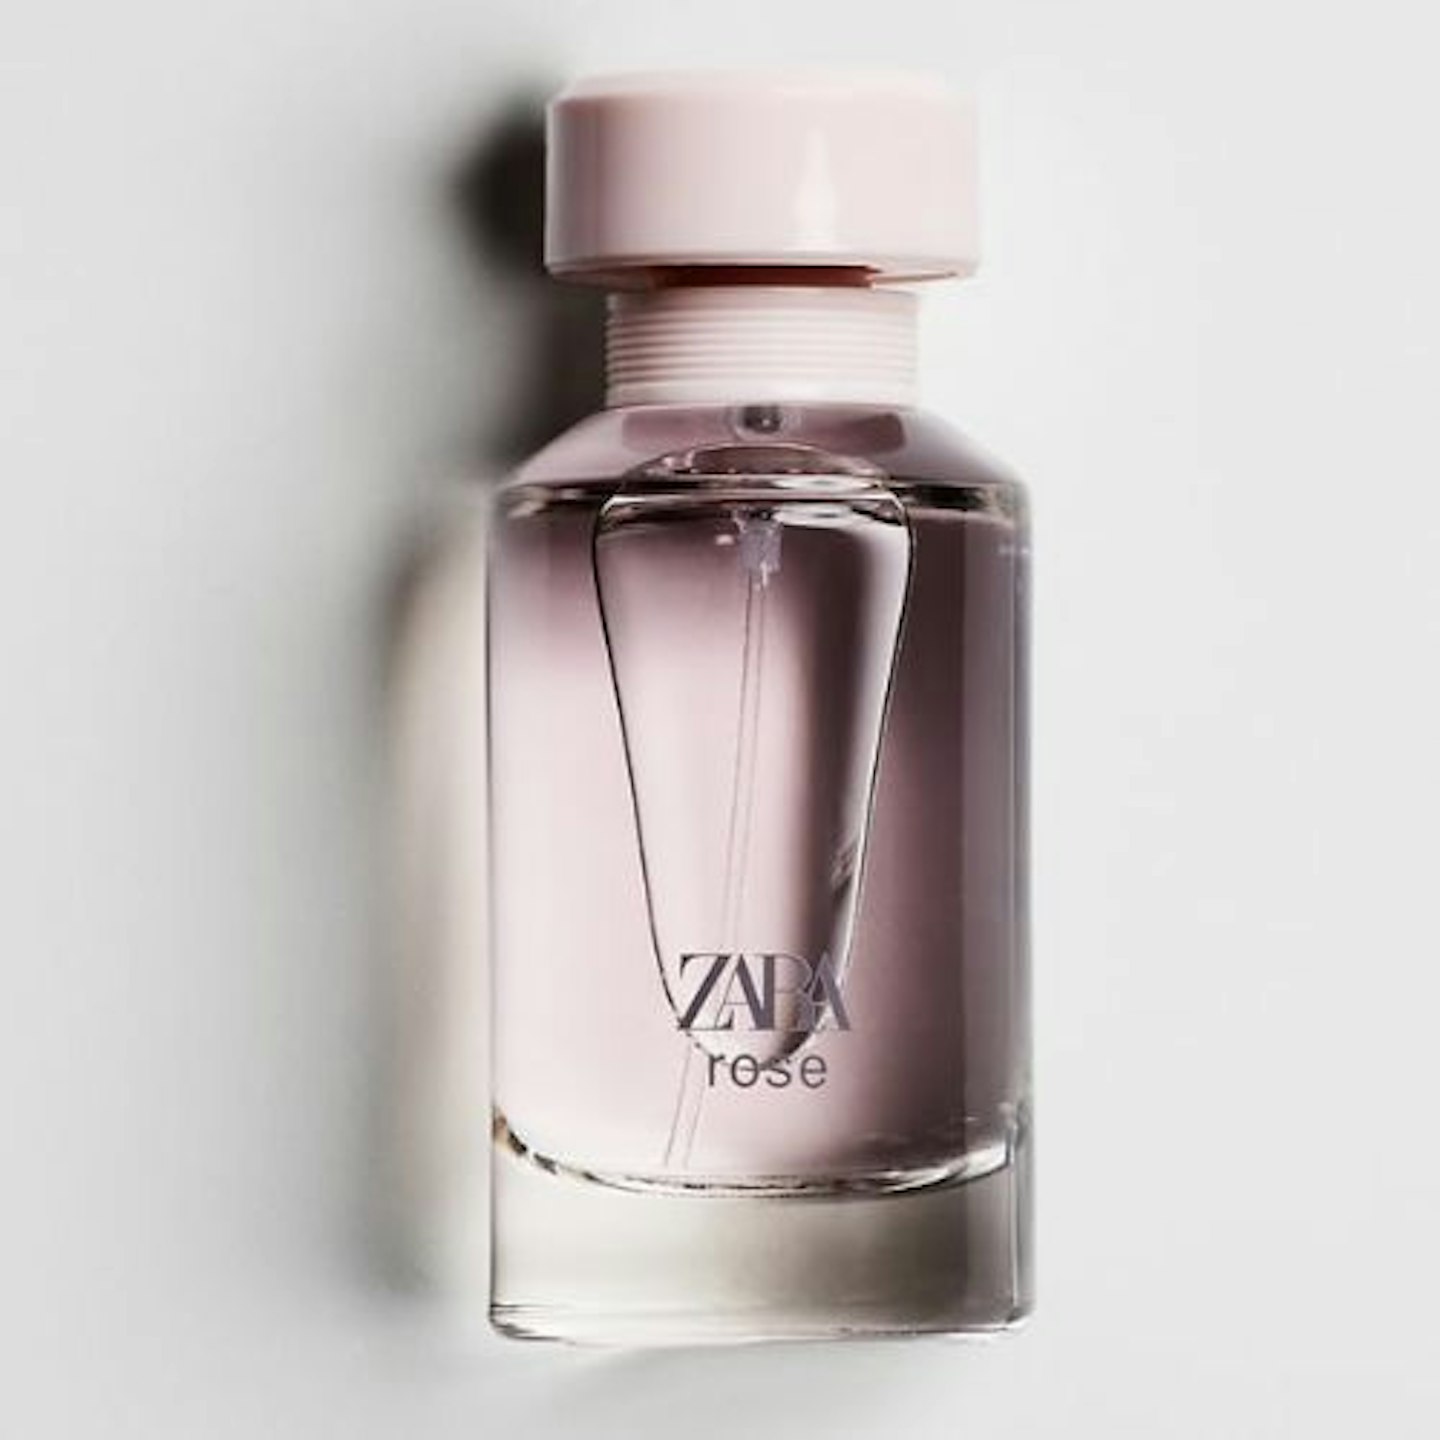 20 popular zara perfume dupes list for woman - PureTonka